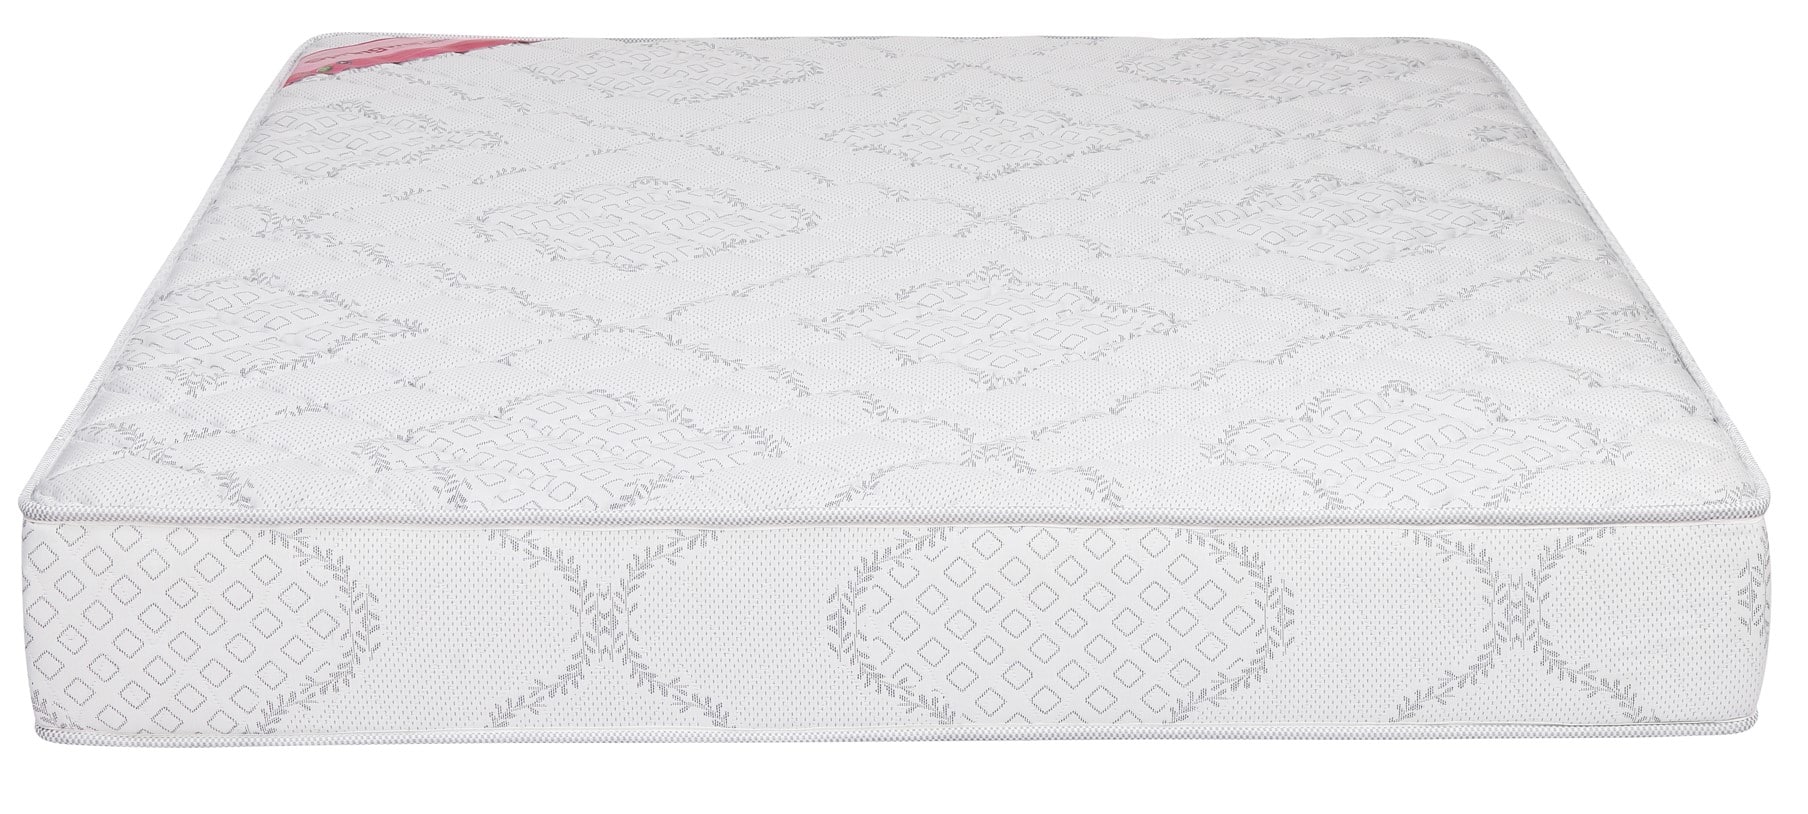 springwel ecosoft 8-inch queen size spring mattress